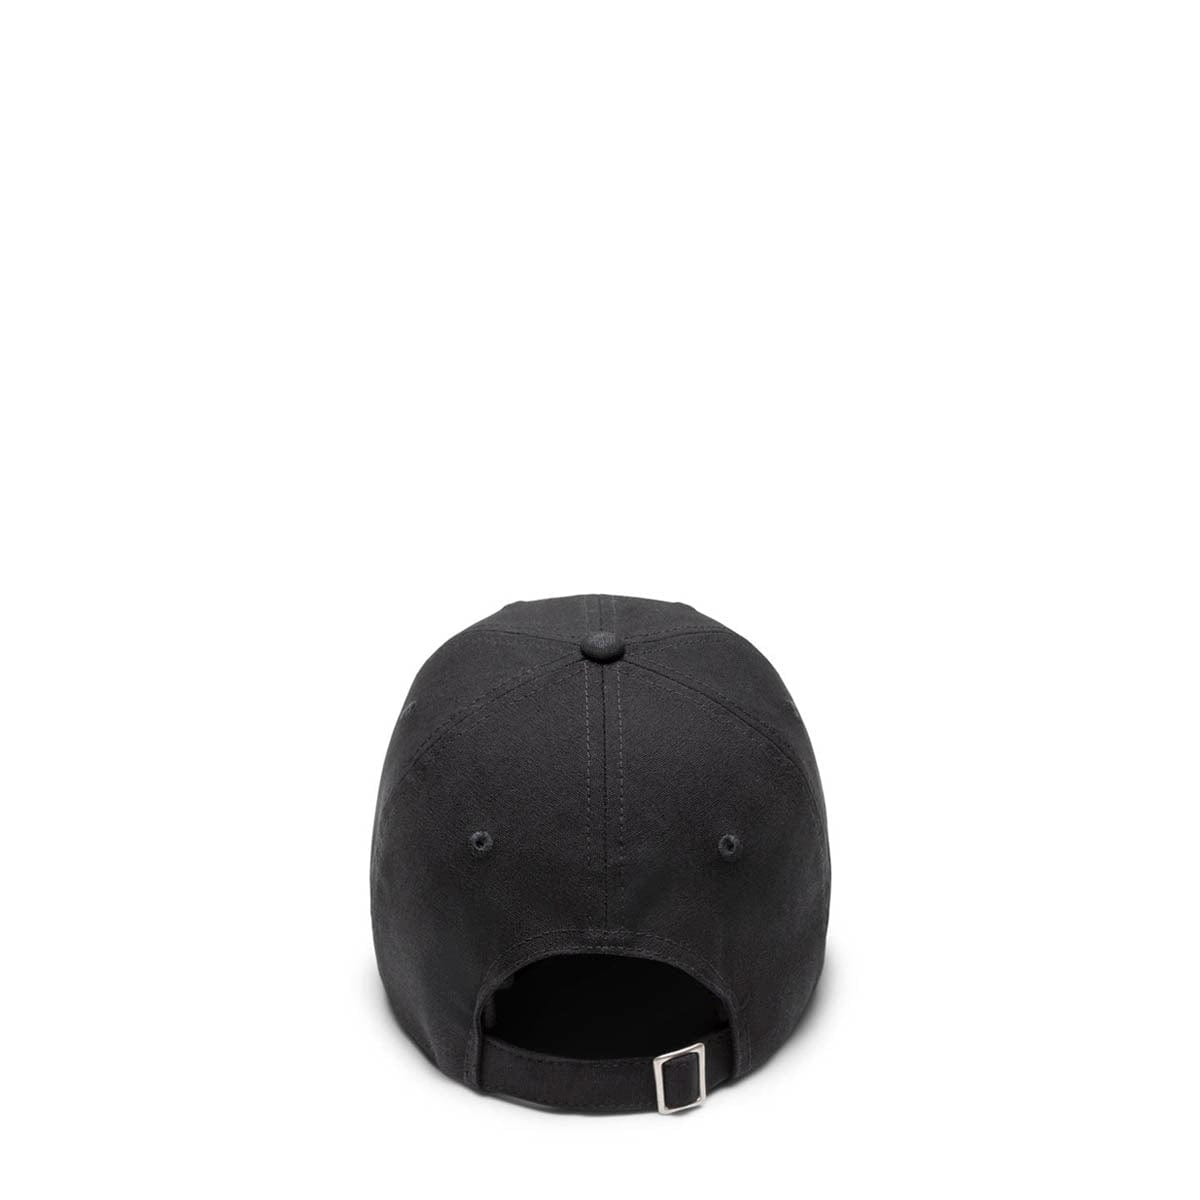 The North Face Headwear TNF BLACK / O/S NORM HAT